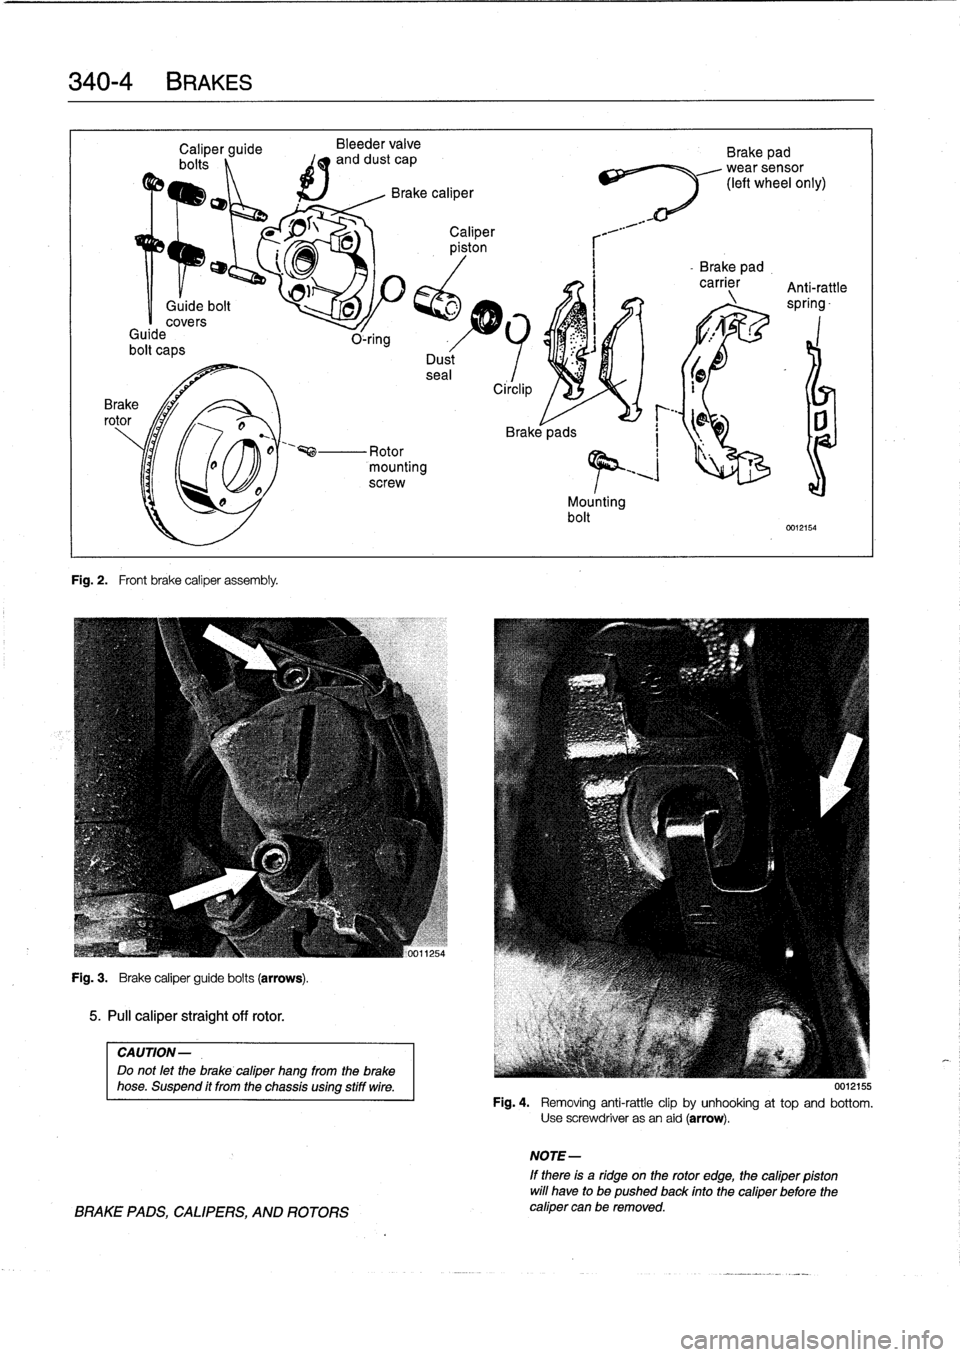 BMW 318i 1997 E36 Workshop Manual 
340-
4
BRAKES

Fig
.
2
.

	

Front
brake
caliper
assembly
.

Bleeder
valve
and
dust
cap

Mounting
bolt

Brake
pad
wearsensor
(left
wheel
only)

-
Brake
pad
.
carrier
Anti-rattle
^_
spring-

0012154

